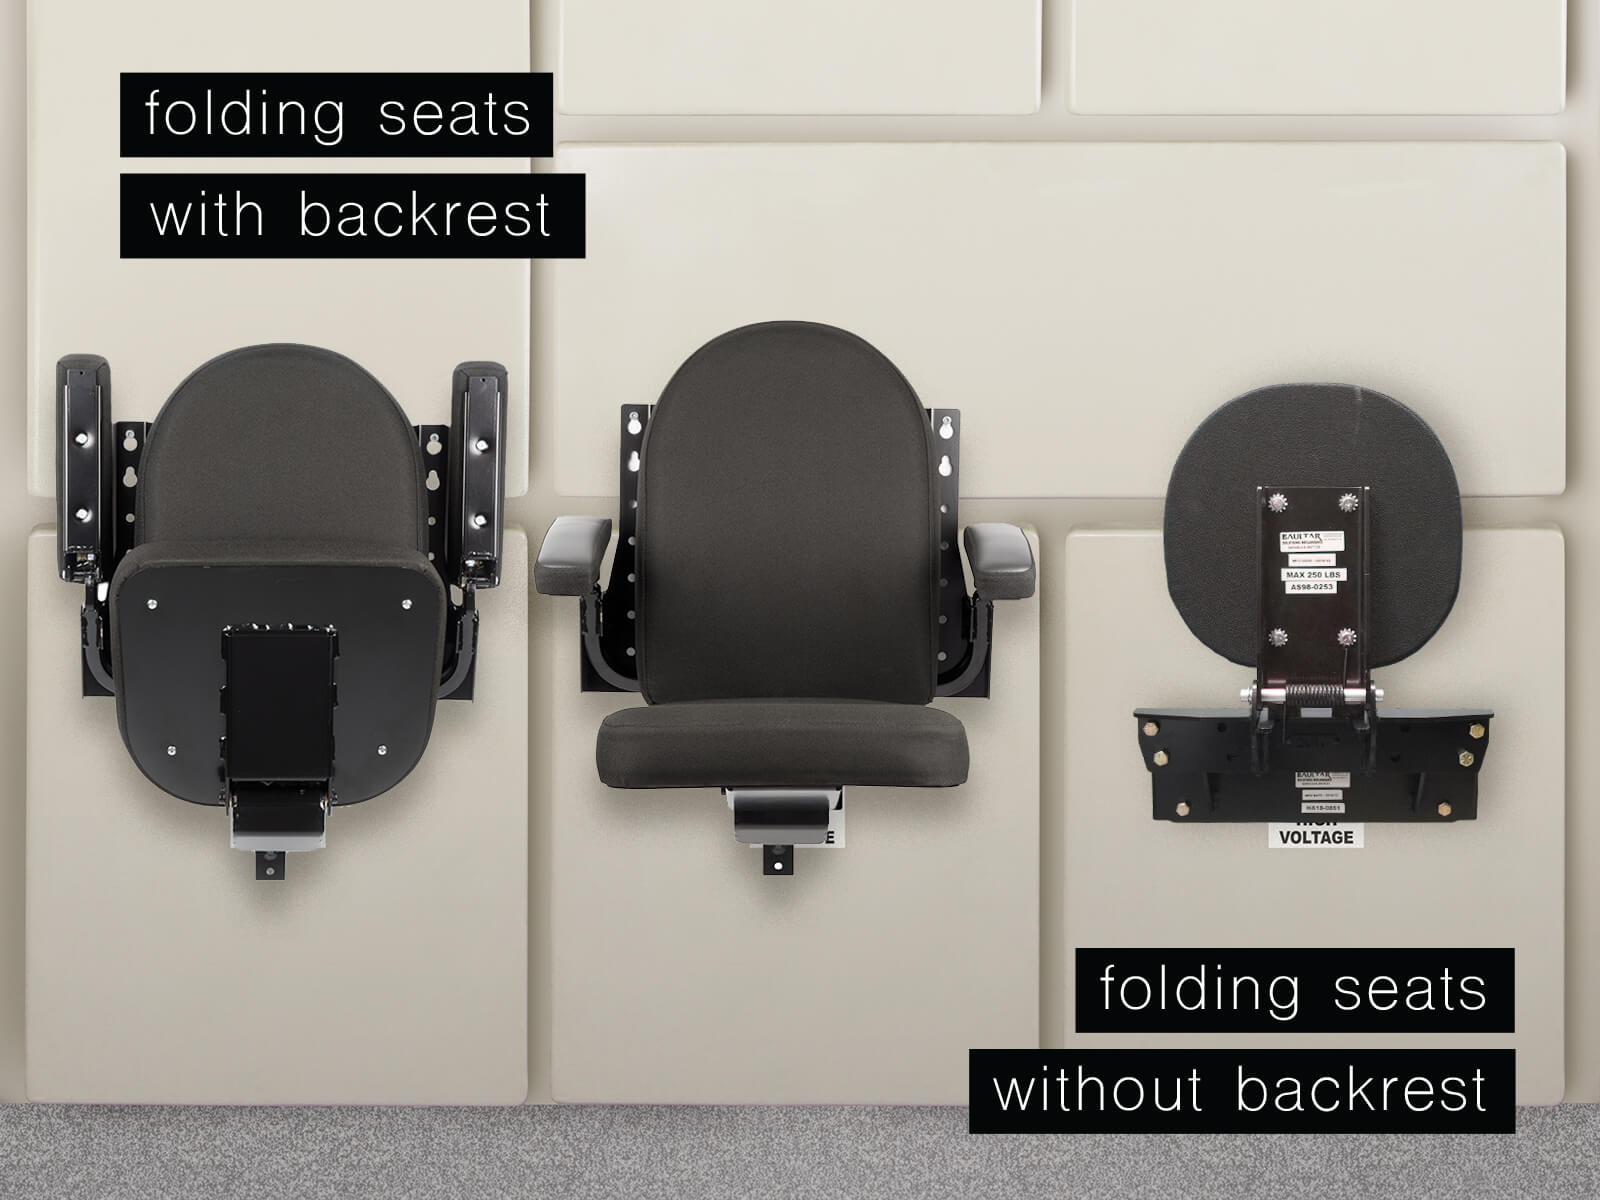 Baultar's Folding Seats